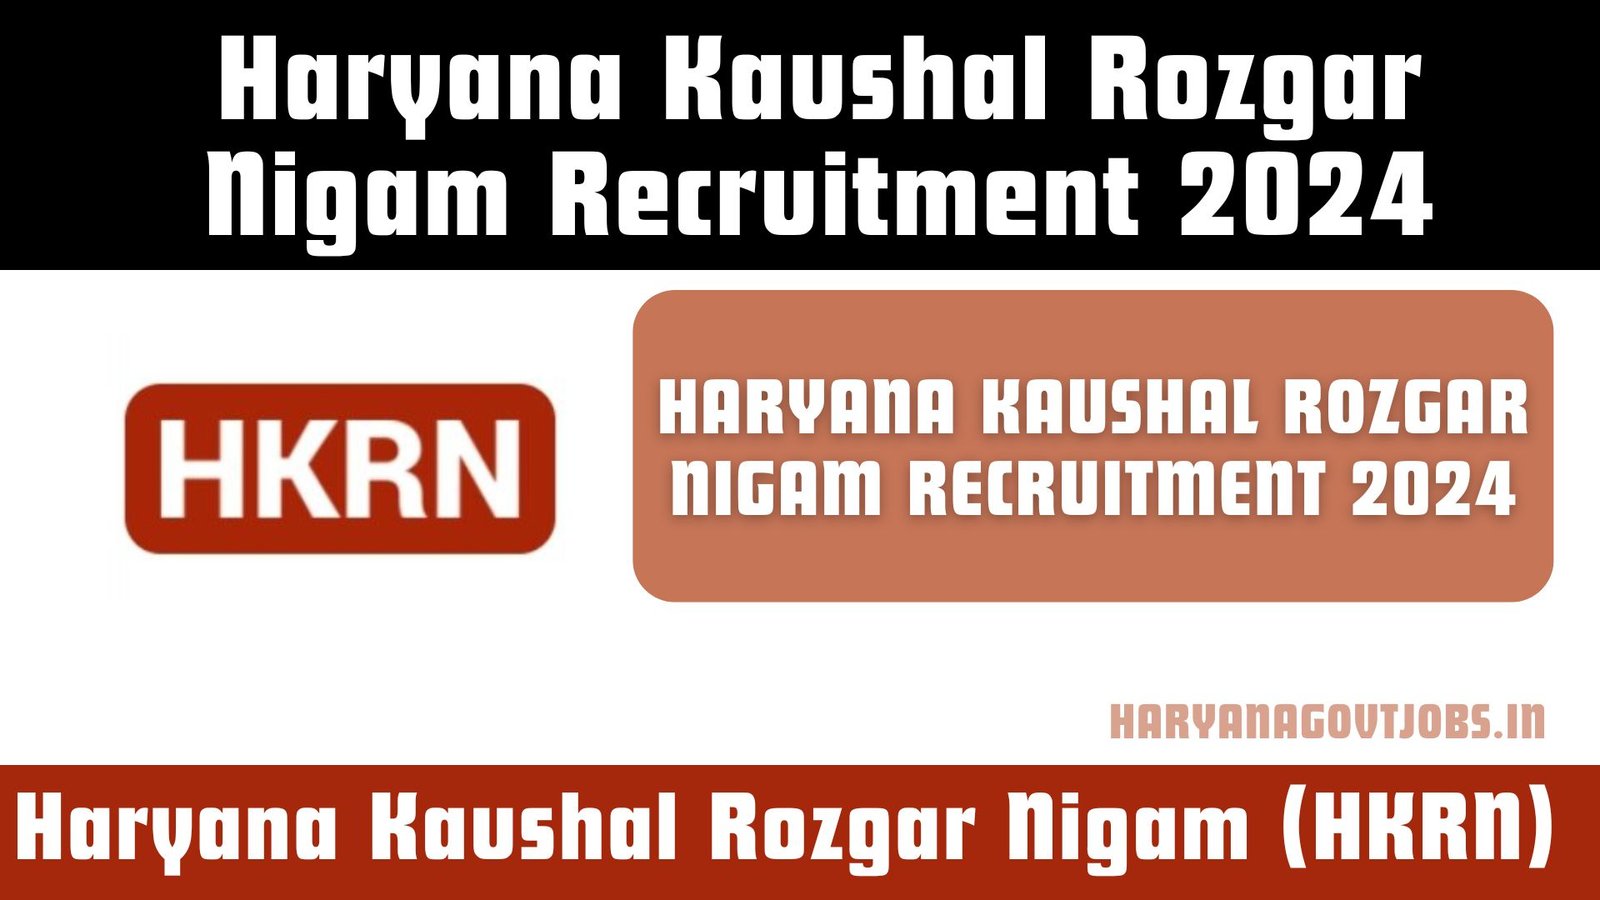 Haryana Kaushal Rozgar Nigam (HKRN) Recruitment 2024 Notification and Apply Online